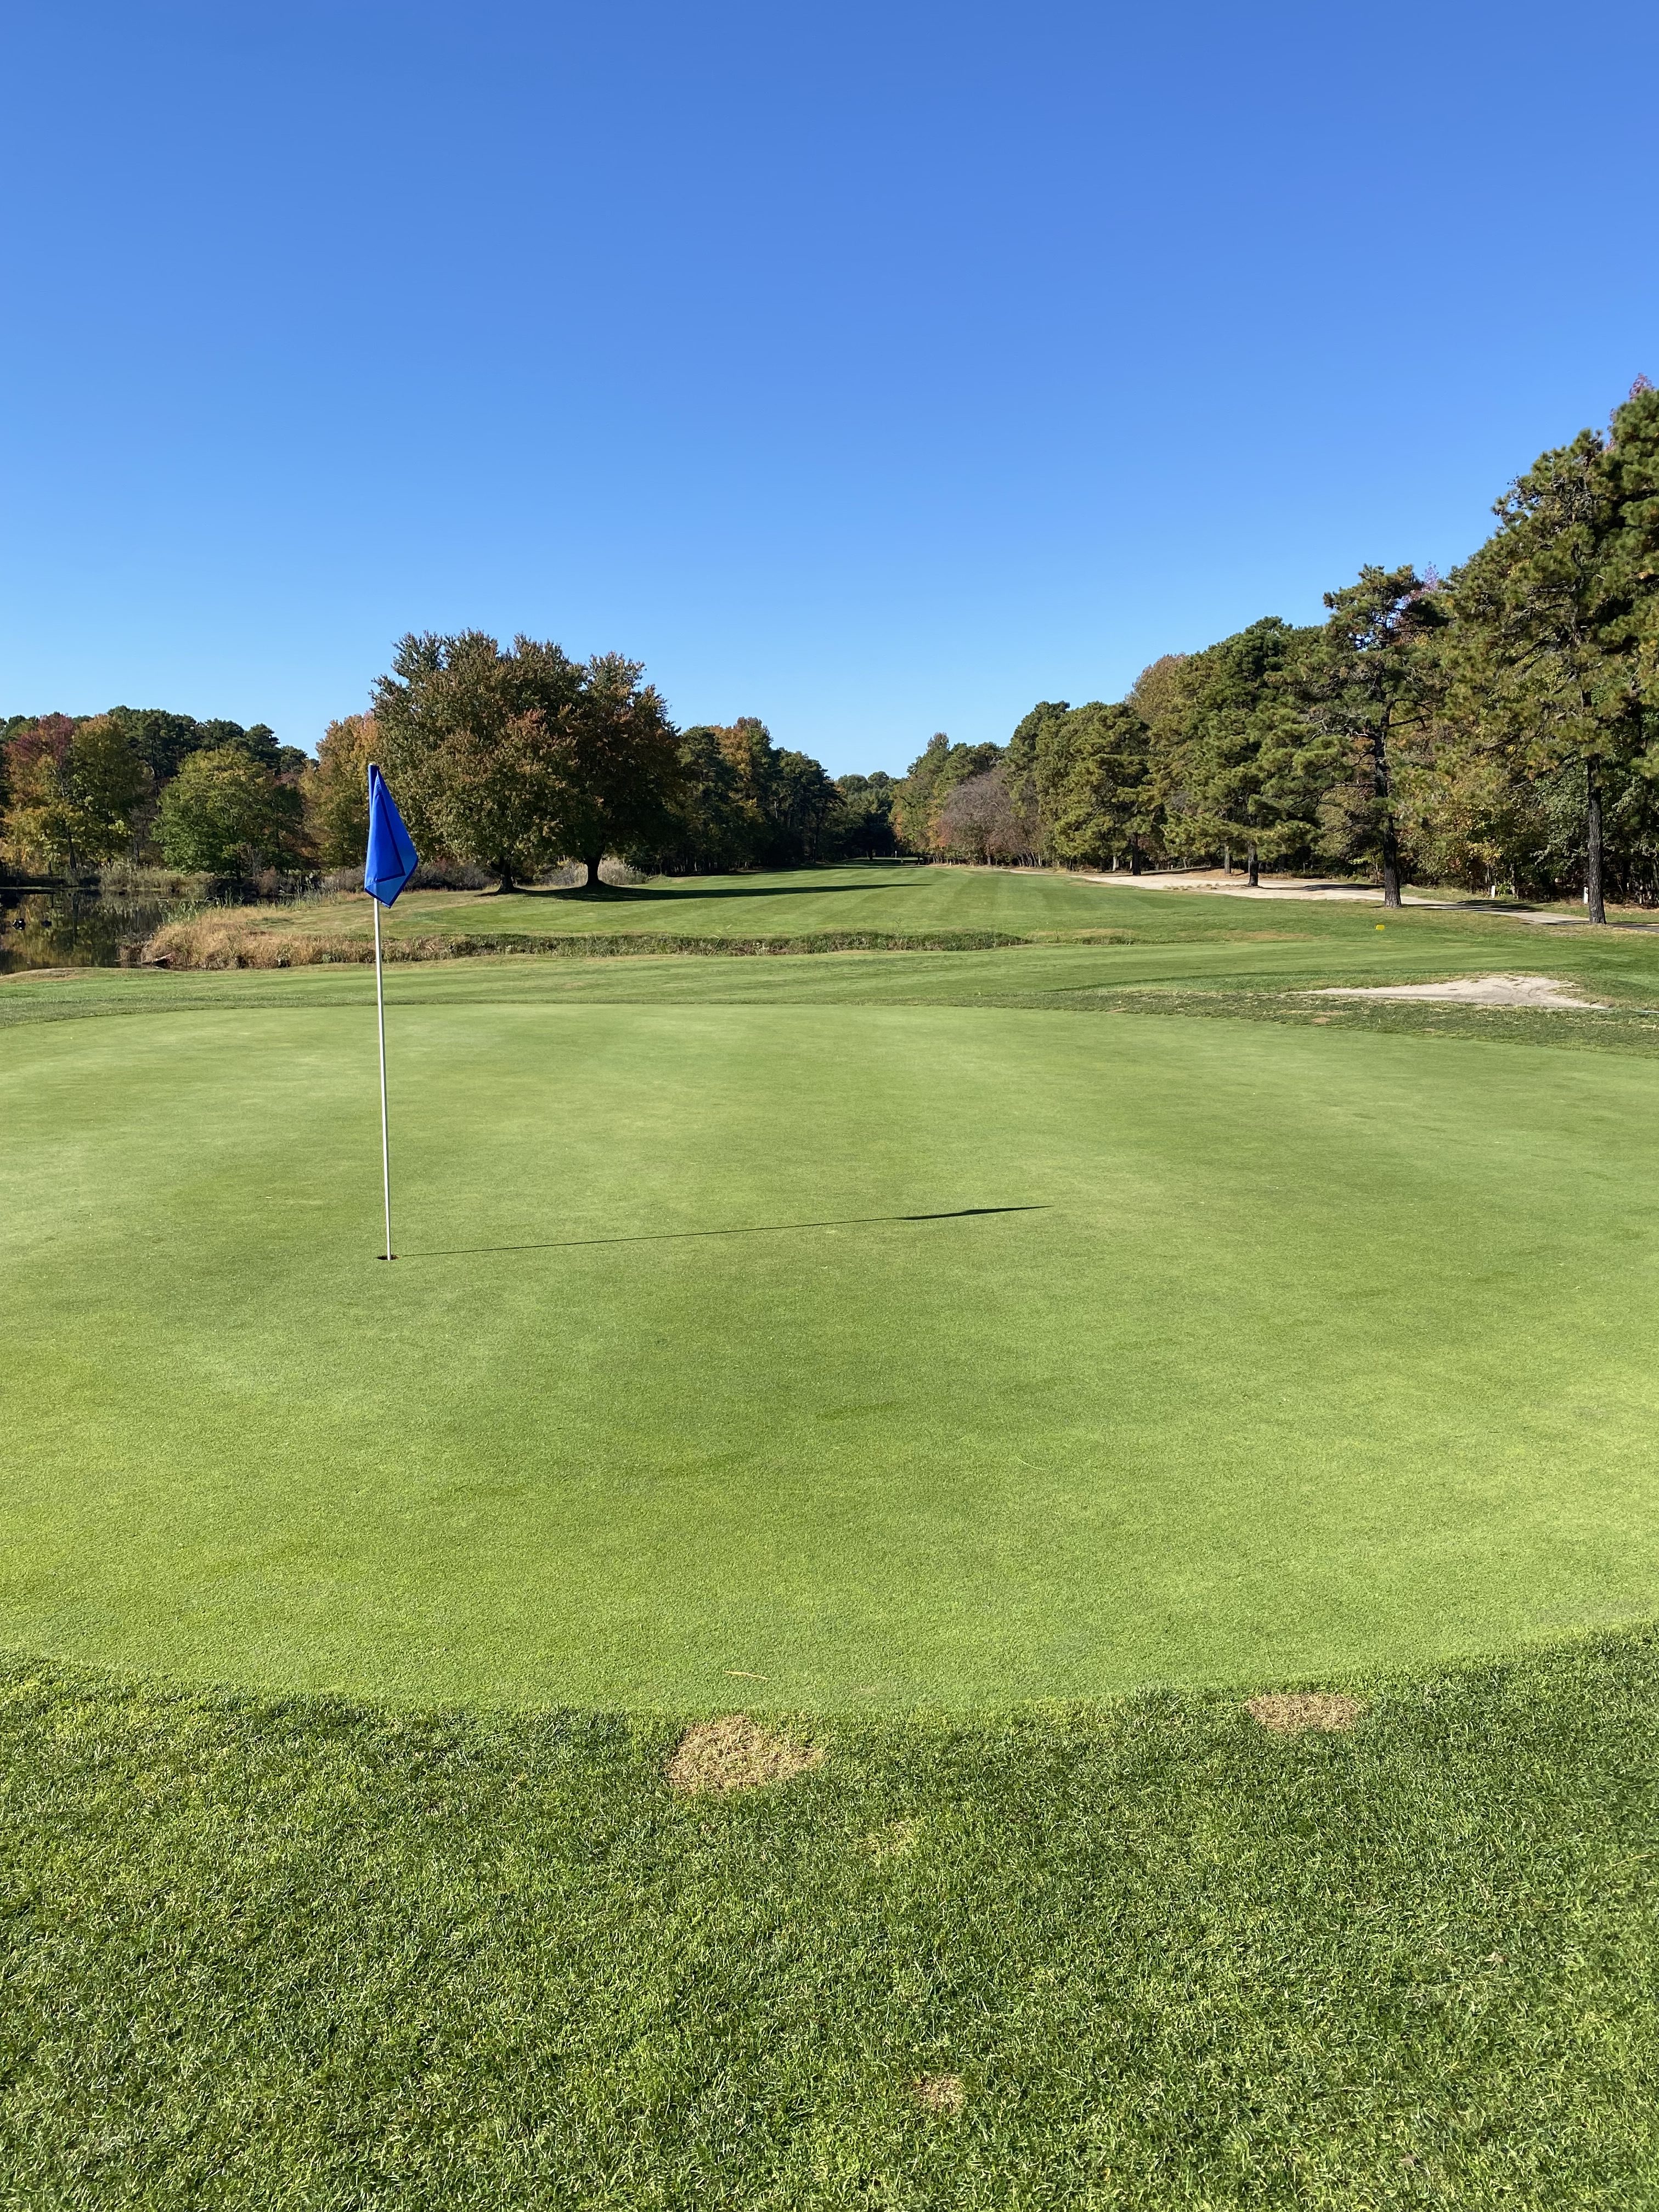 Golf course hole with blue flag over hole